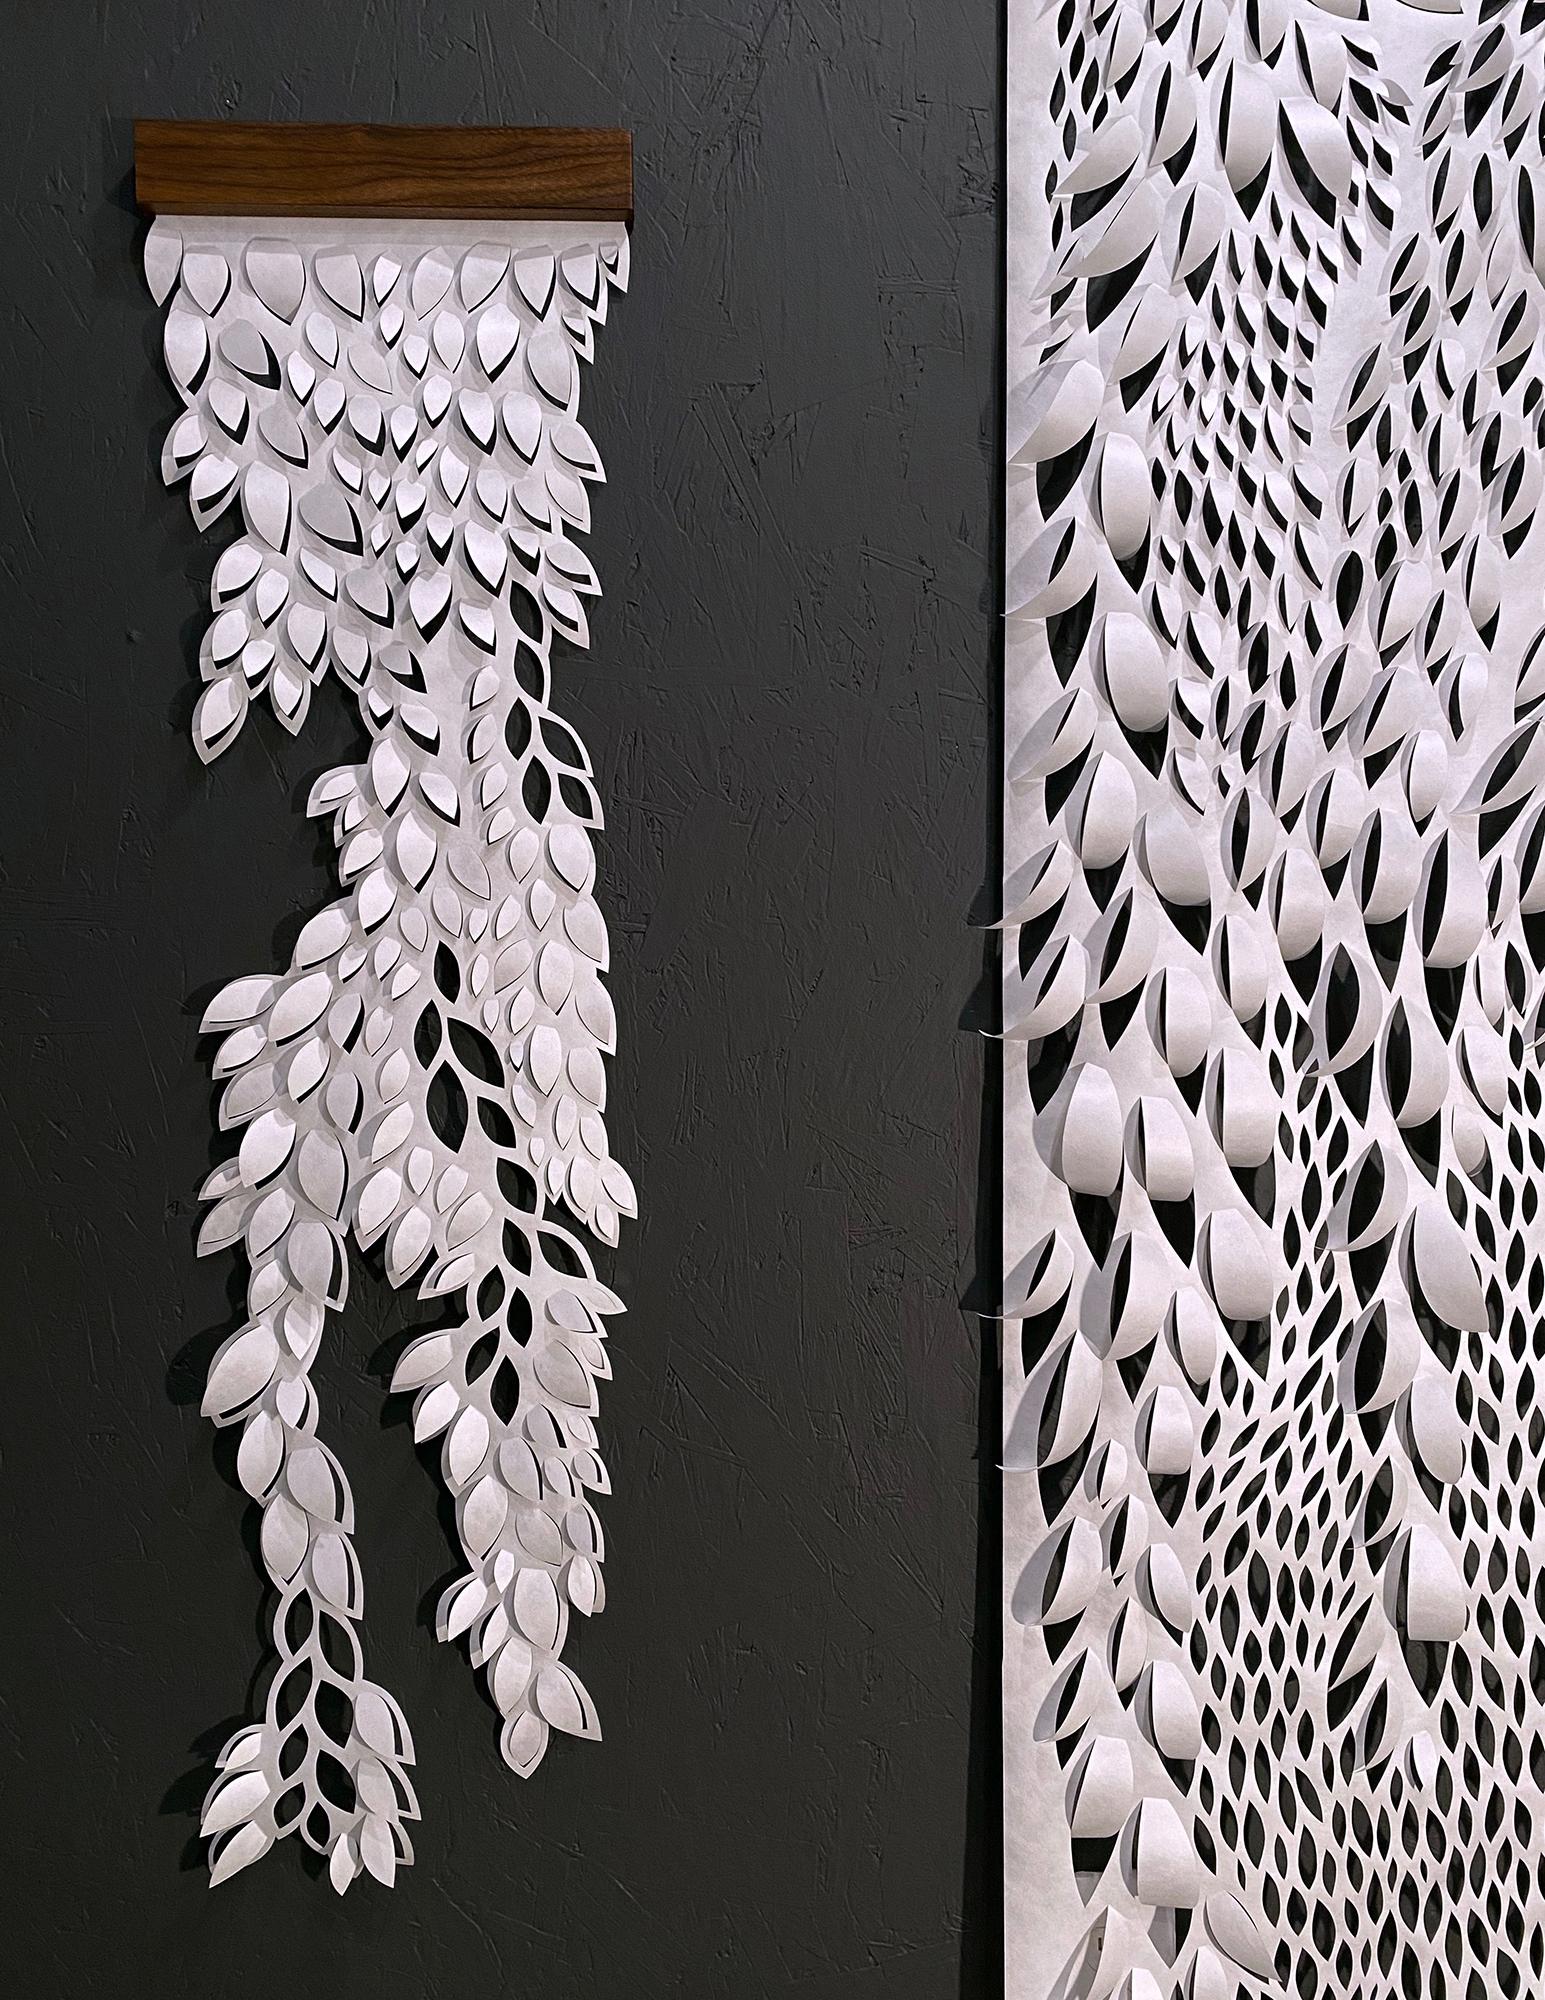 Hand-cut Paper Scroll, Sculptural Wall Hangings 60x36 - Brown Abstract Sculpture by Summer J. Hart